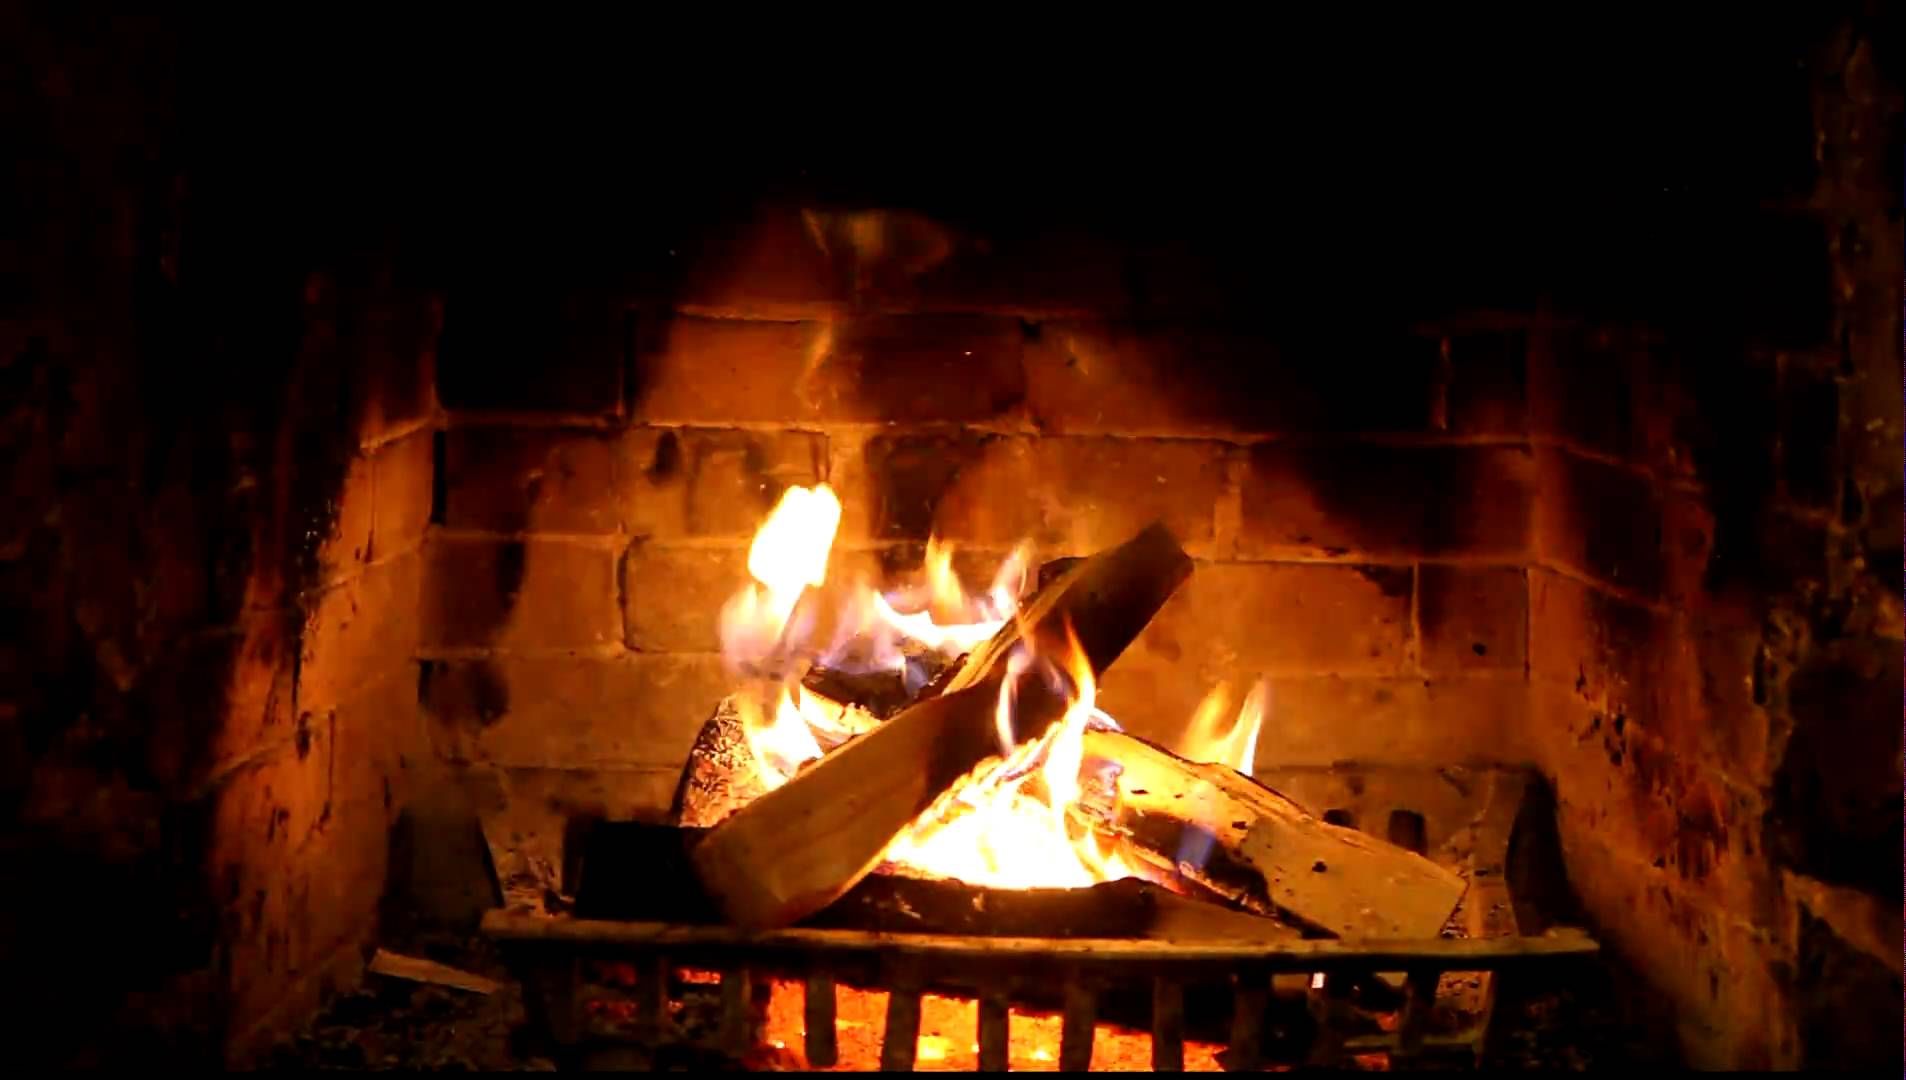 Fireplace Screensaver Fresh Crackling Fireplace In High Def 1080p